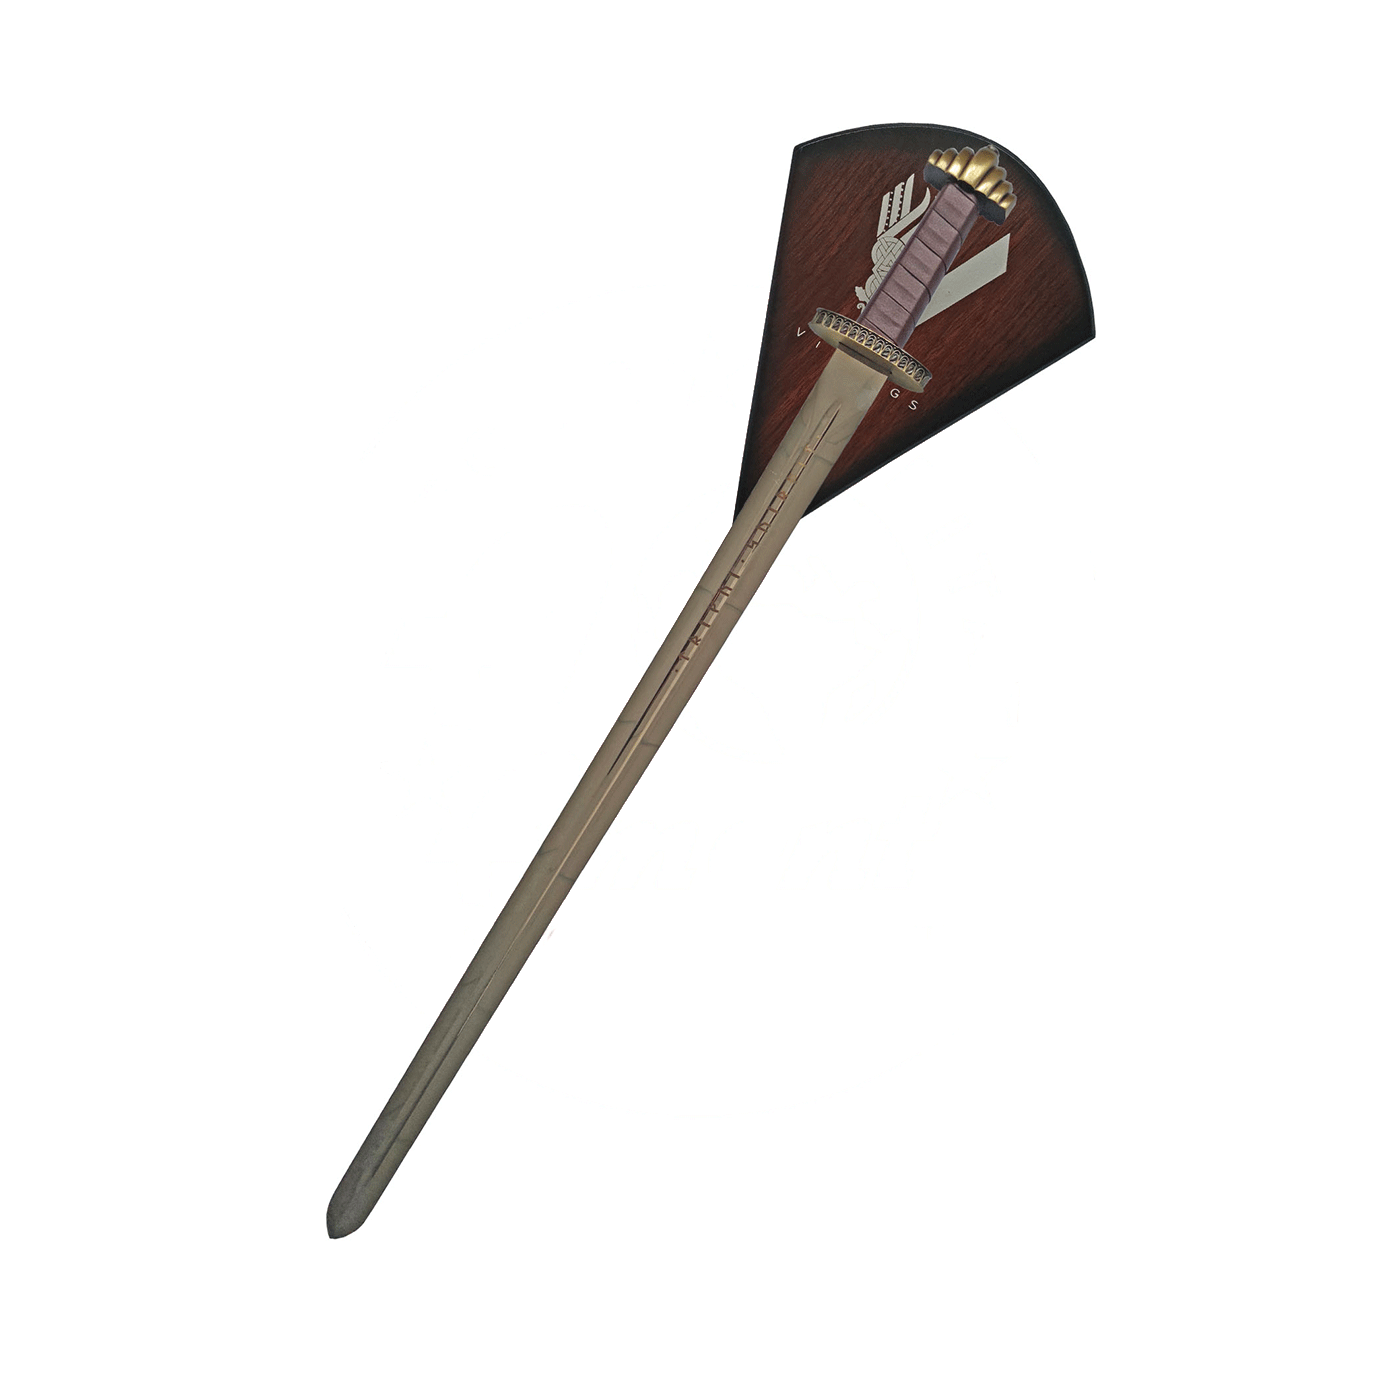 VIKING SWORD (INSPIRED BY THE NETFLIX VIKINGS SERIES) 105cm